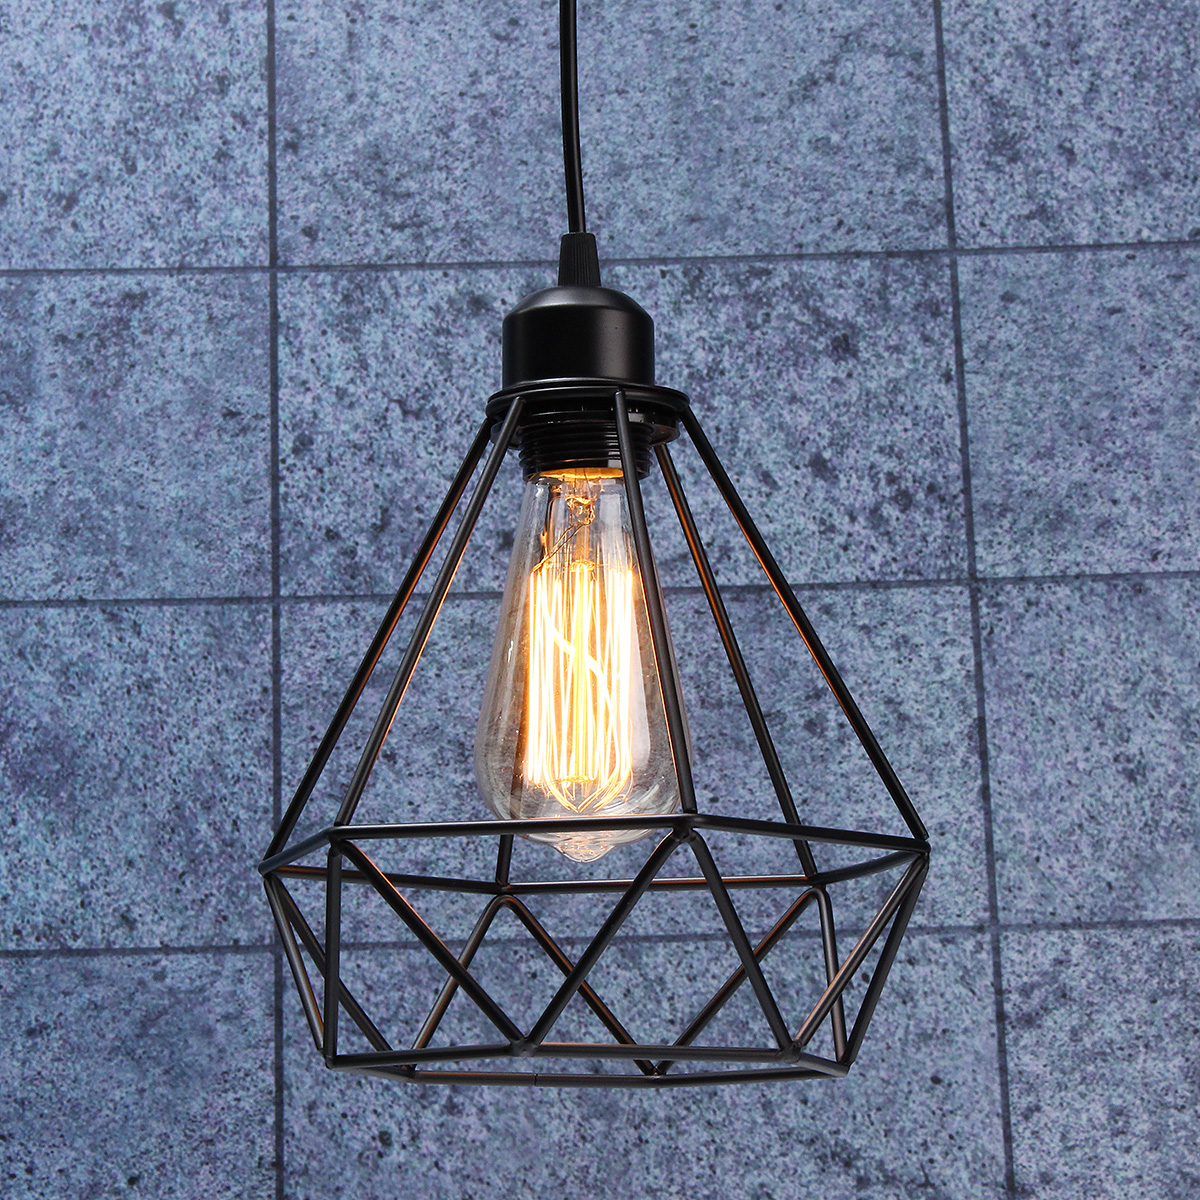 Industrial-Vintage-Metal-Cage-Hanging-Ceiling-Pendant-Lamp-Lighting-Holder-Shade-1534598-6